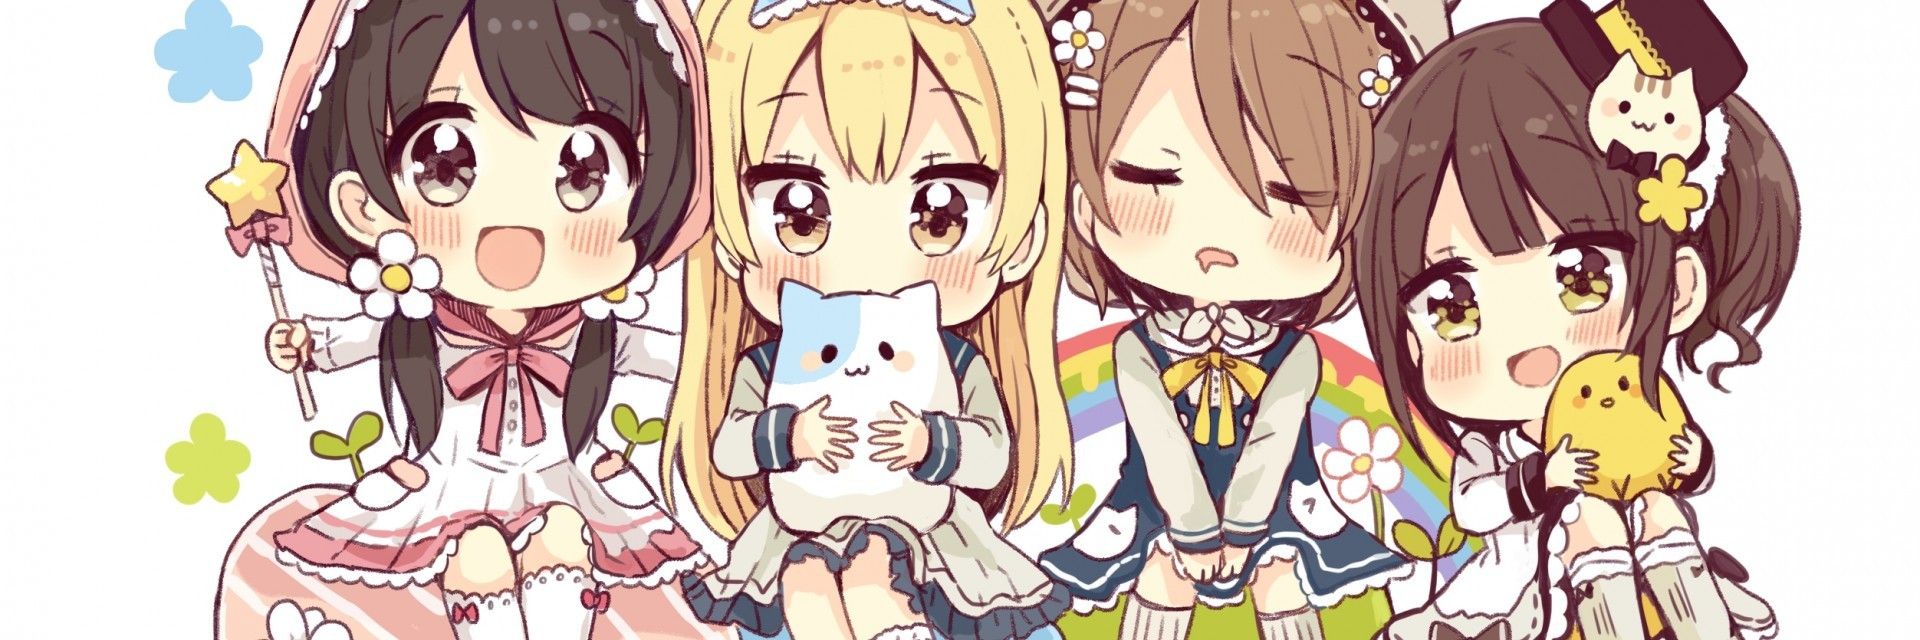 Download 1920x640 Anime Girls, Chibi, Cute, Friends Wallpaper